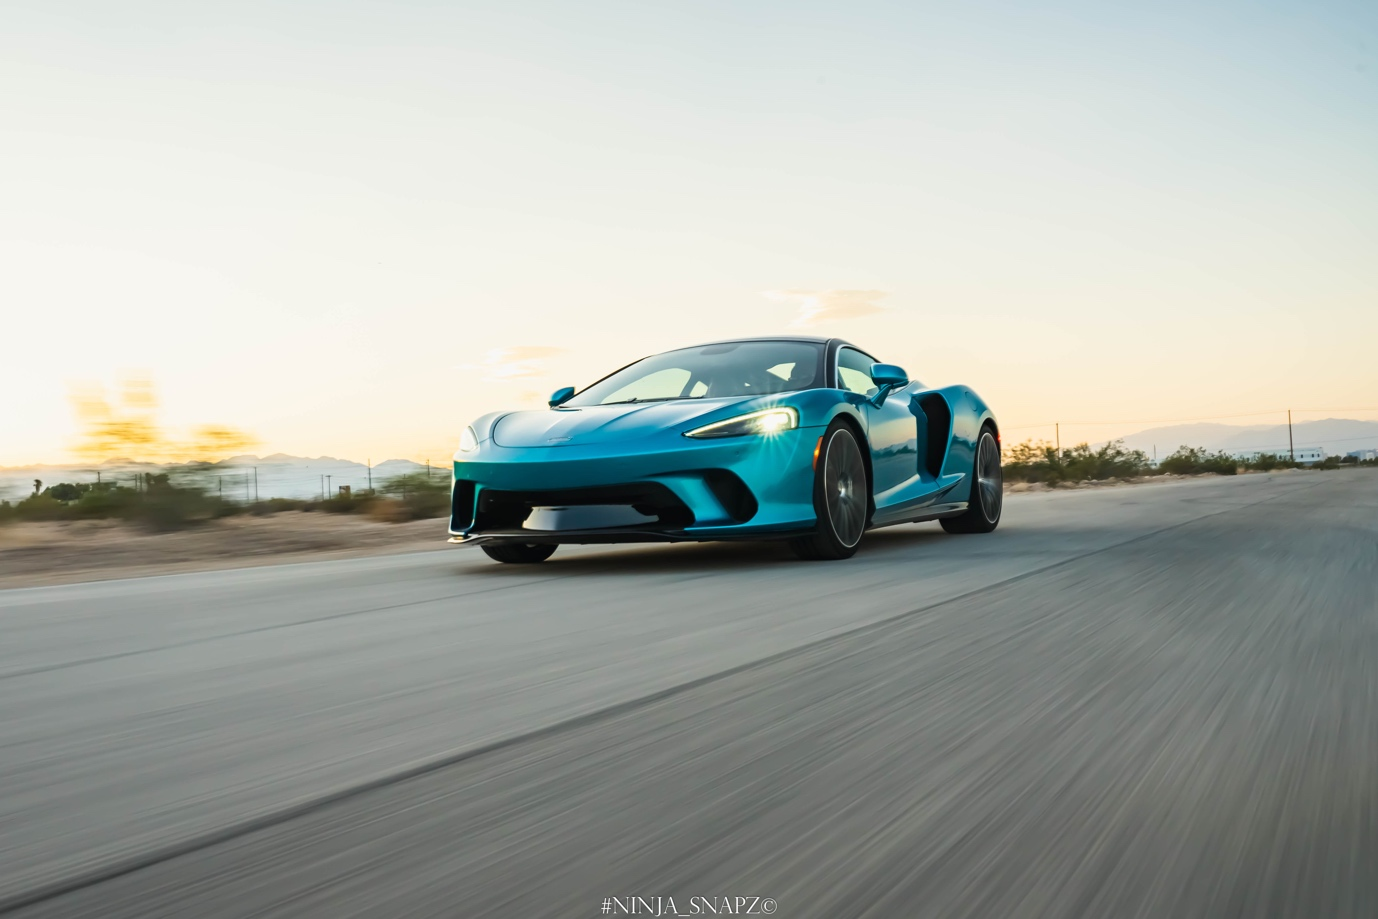 Blue Lamborghini on the road